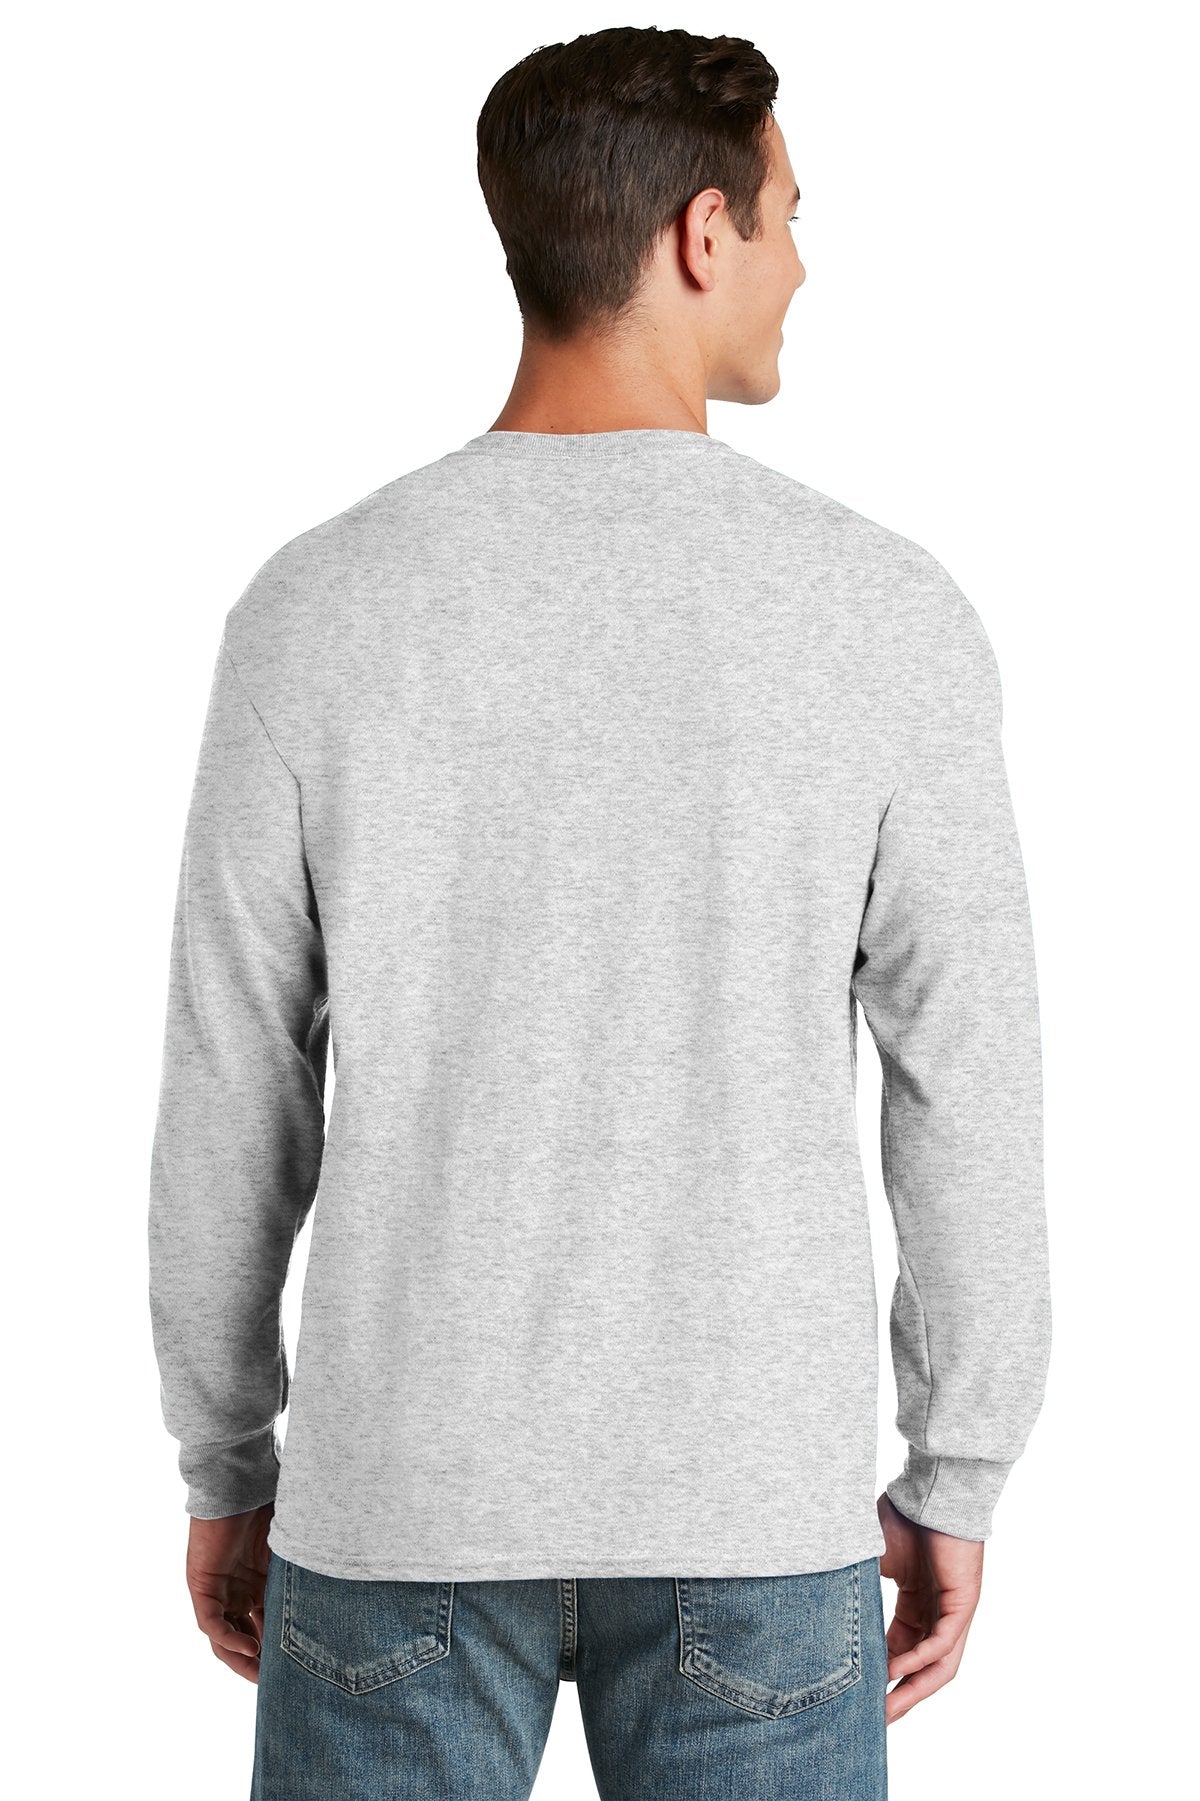 Jerzees Dri-Power 50/50 Cotton/Poly Long Sleeve T-Shirt 29LS Ash